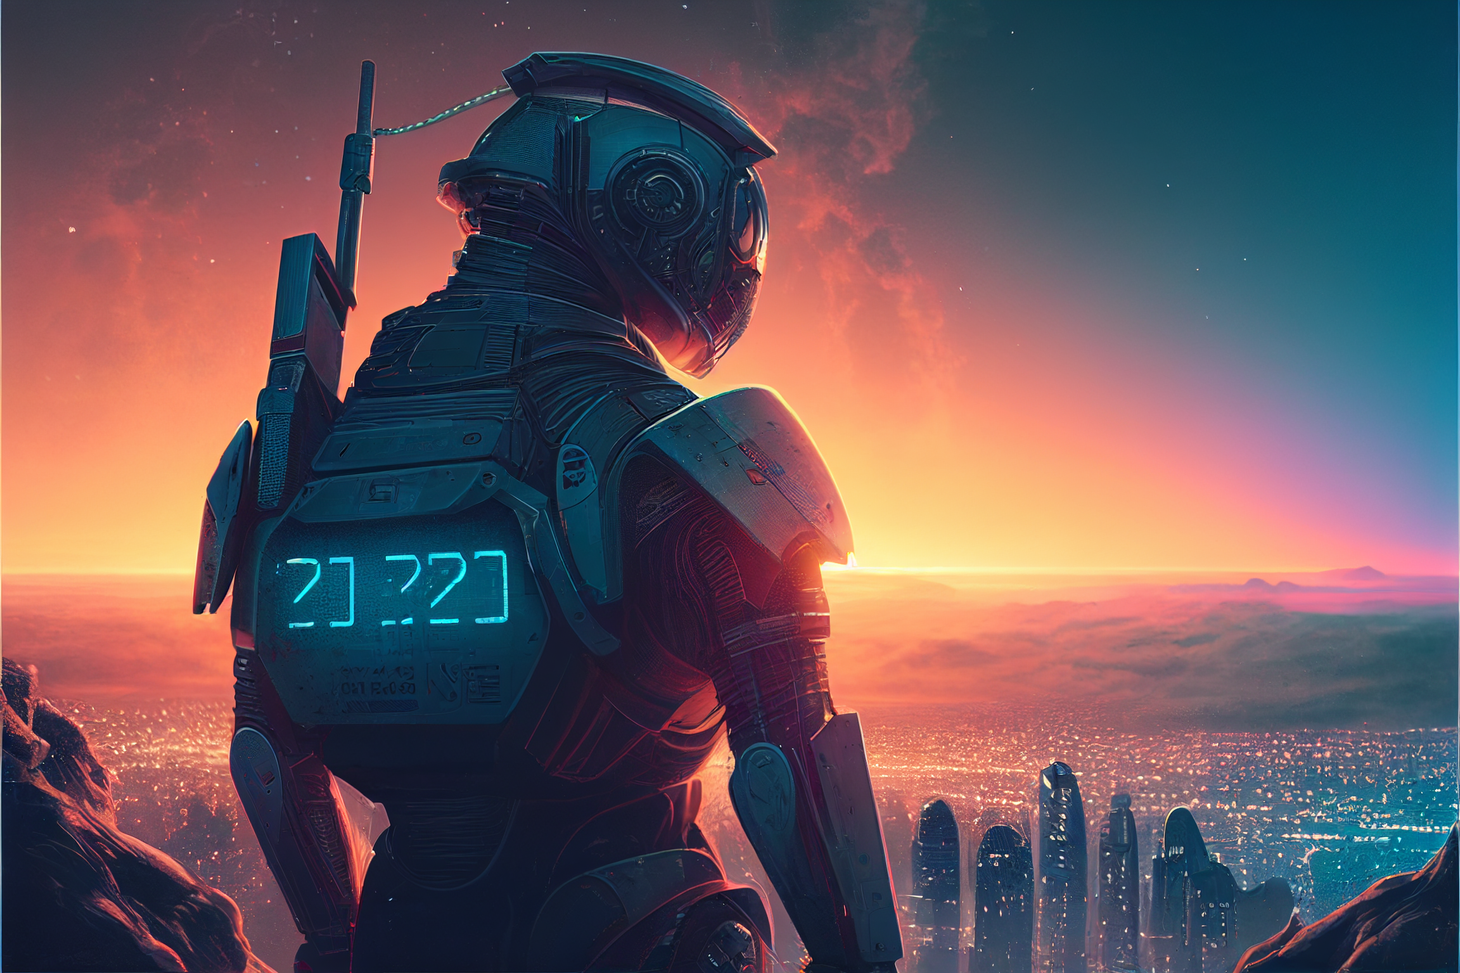 An advanced robot looks toward a sunset from a mountain above a city skyline.